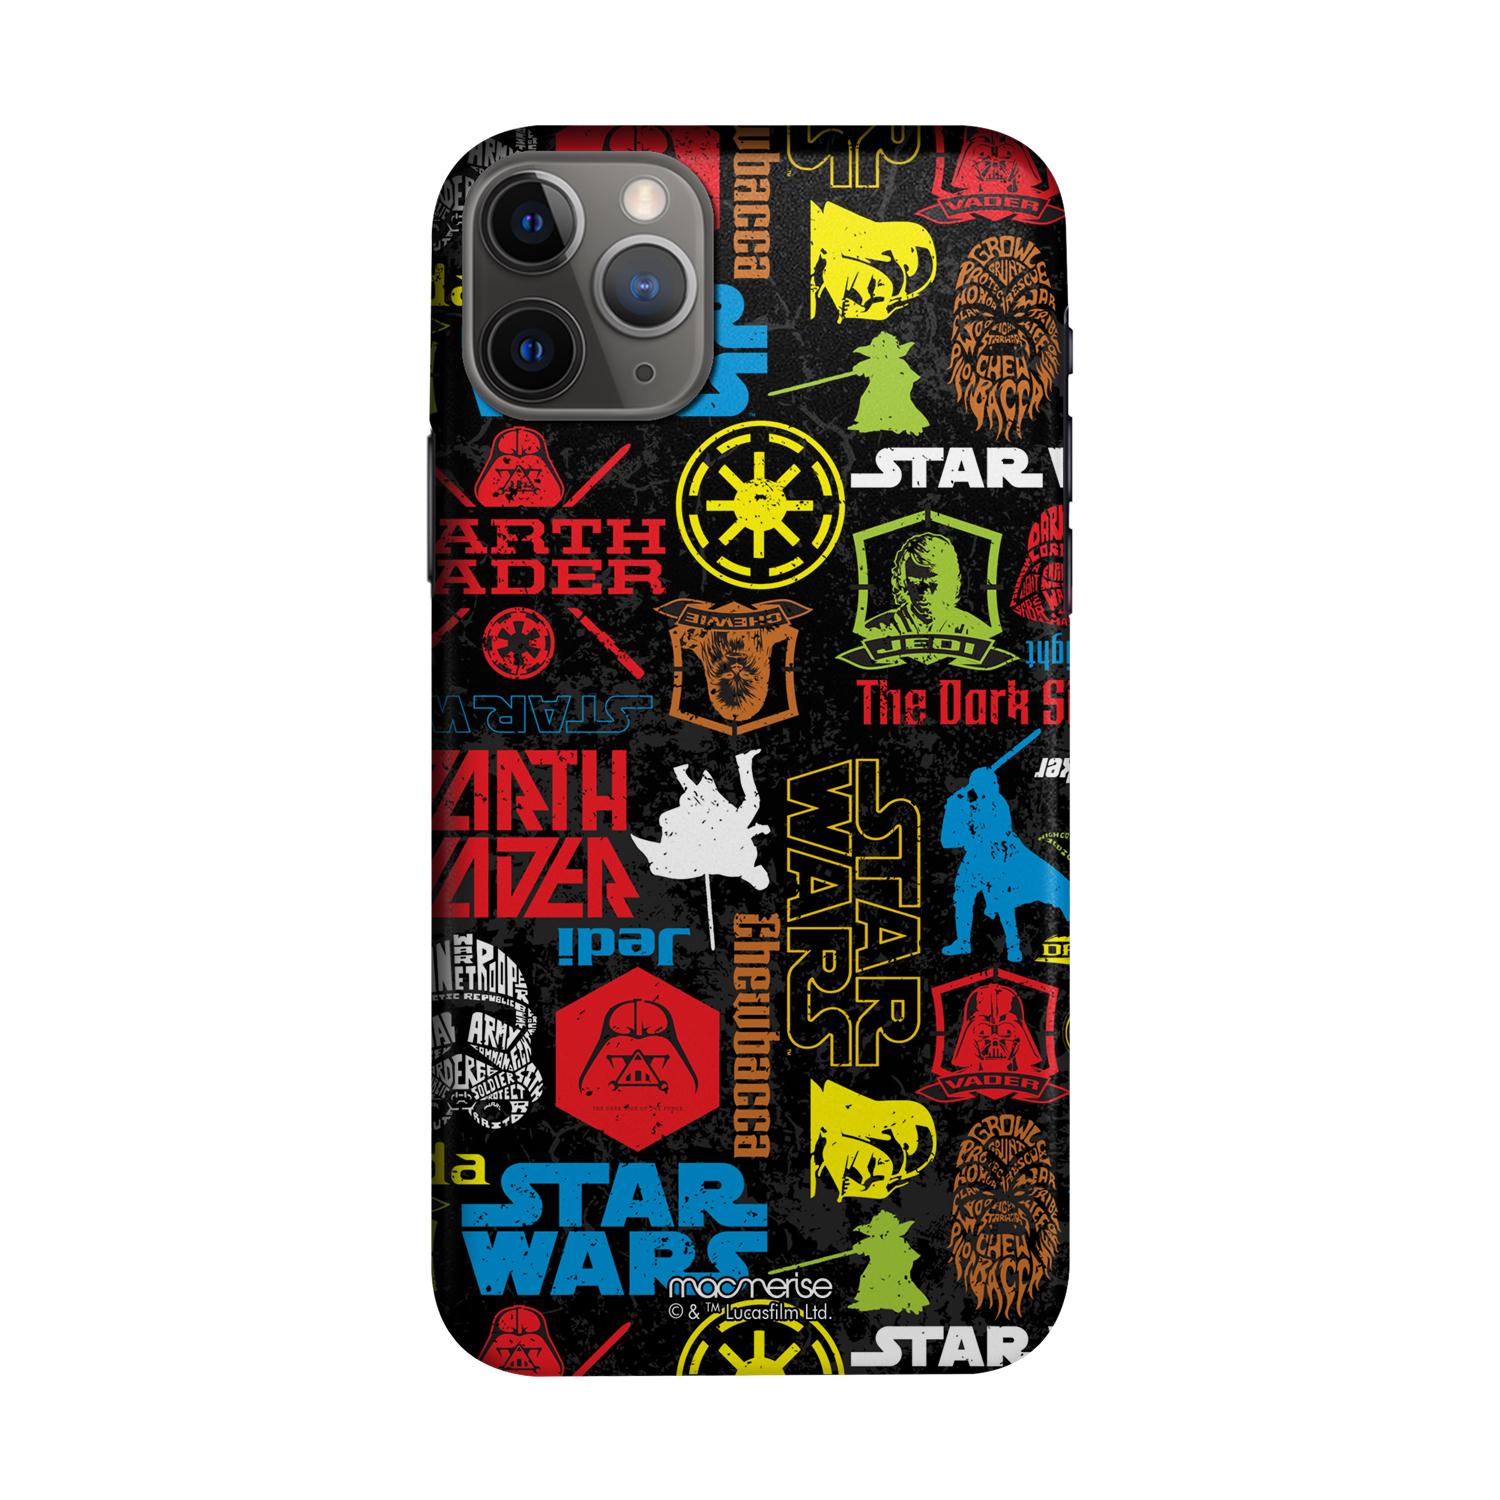 Star wars mashup - Sleek Phone Case for iPhone 11 Pro Max